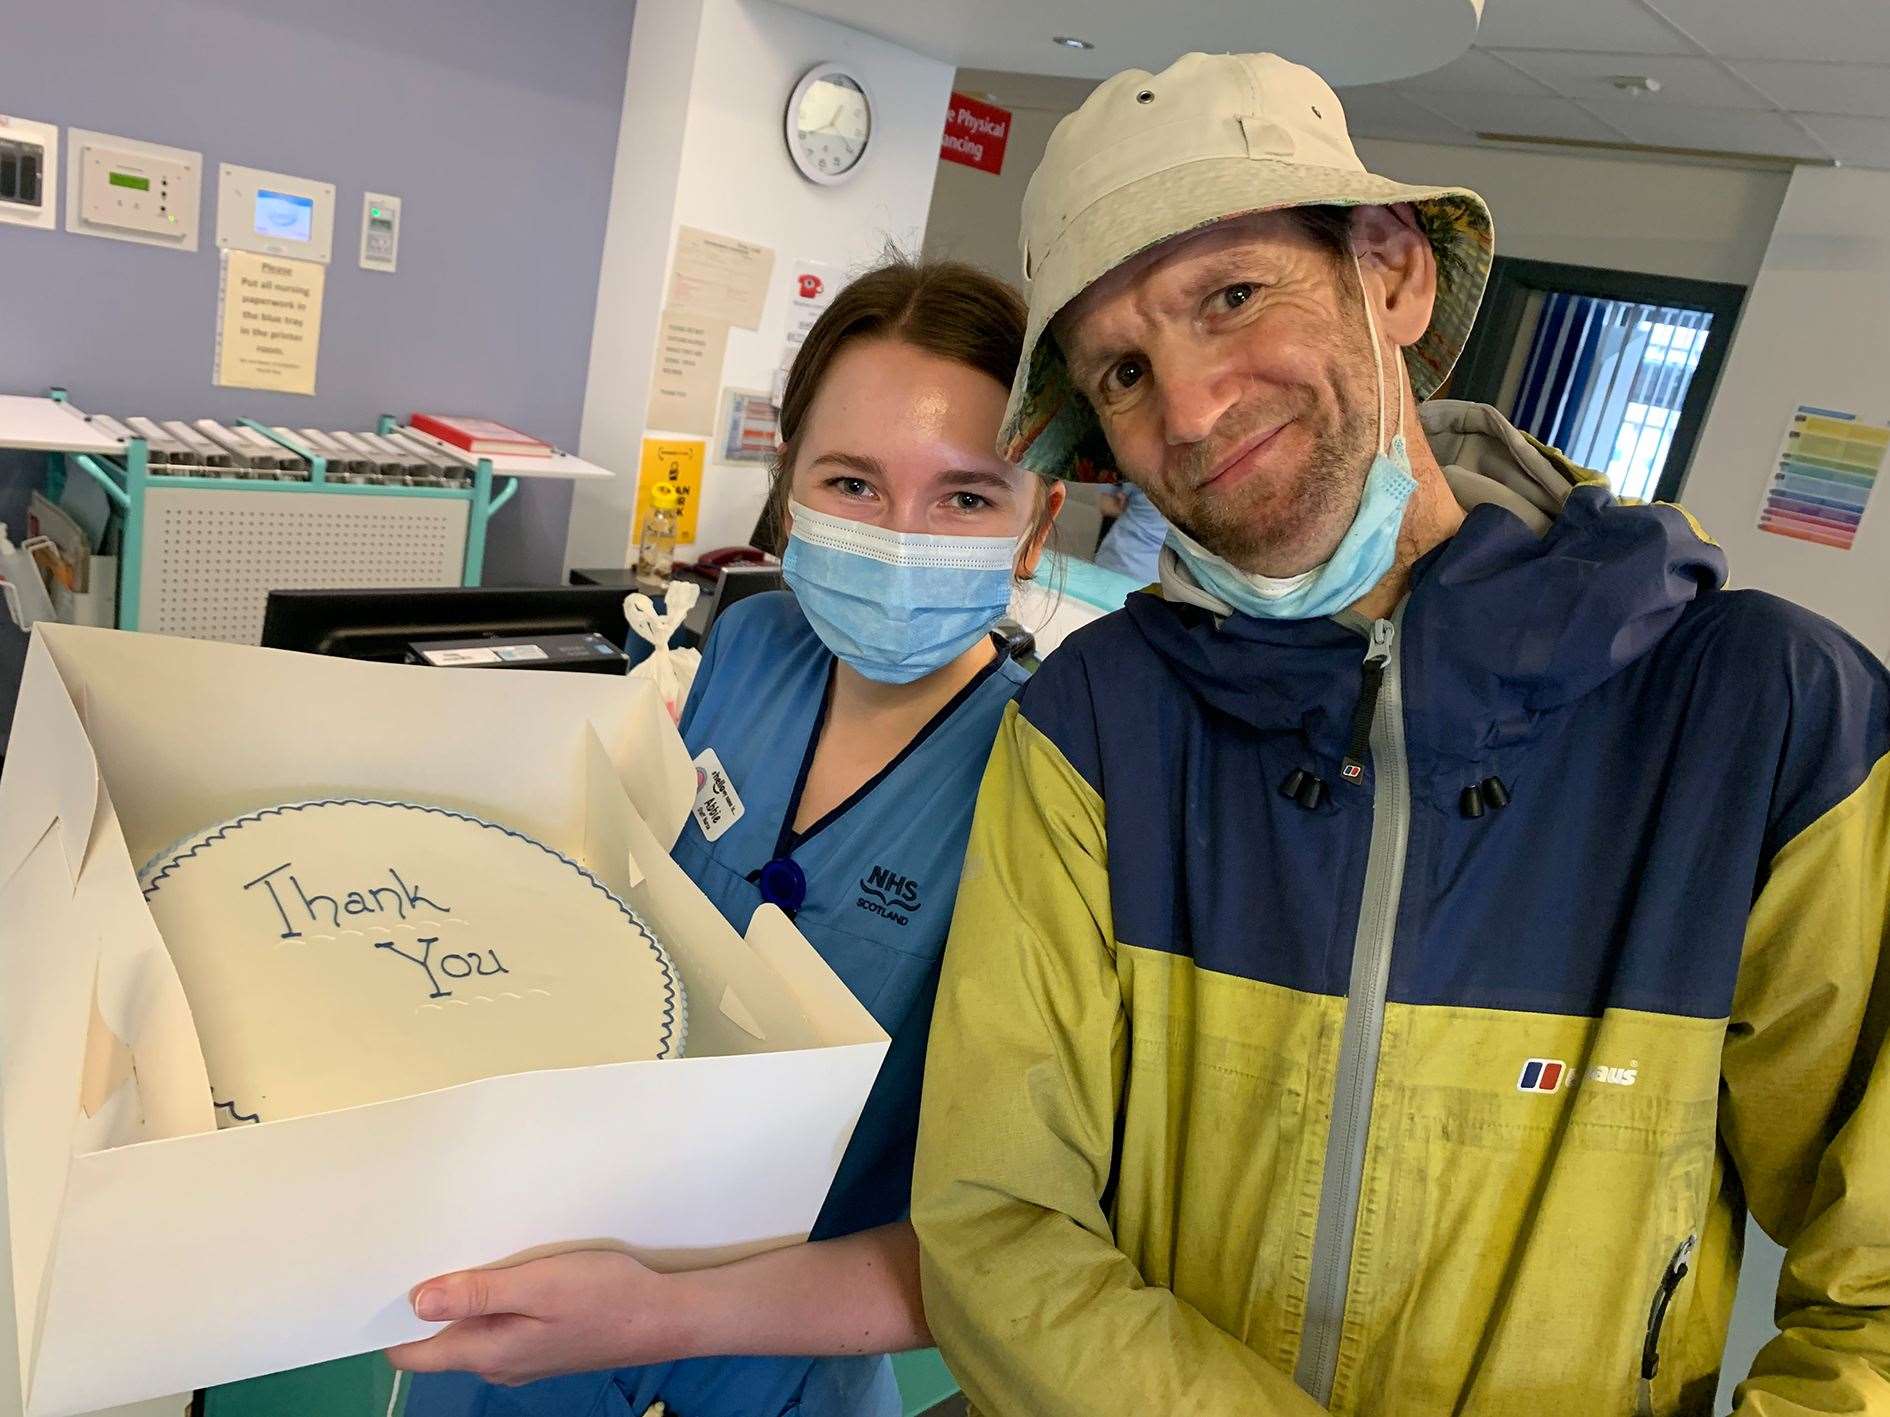 Stuart Dow presents the cake to a staff nurse at ARI renal unit.